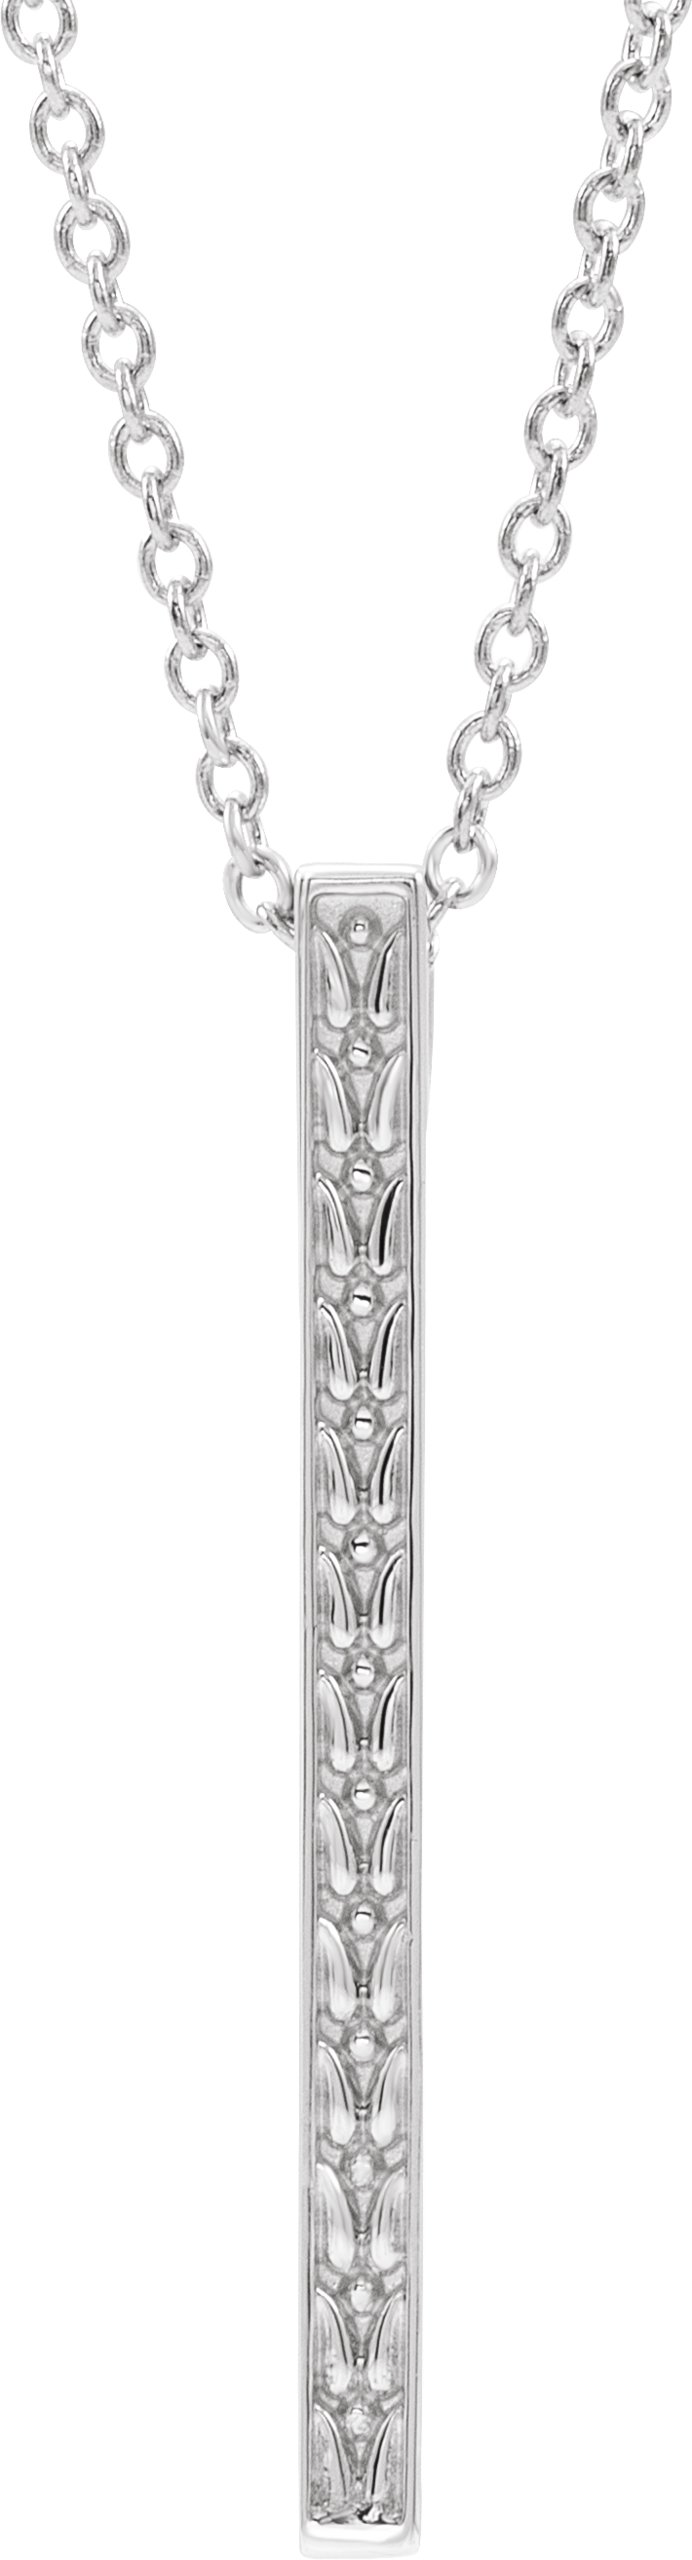 14K White Sculptural-Inspired Bar 16-18" Necklace